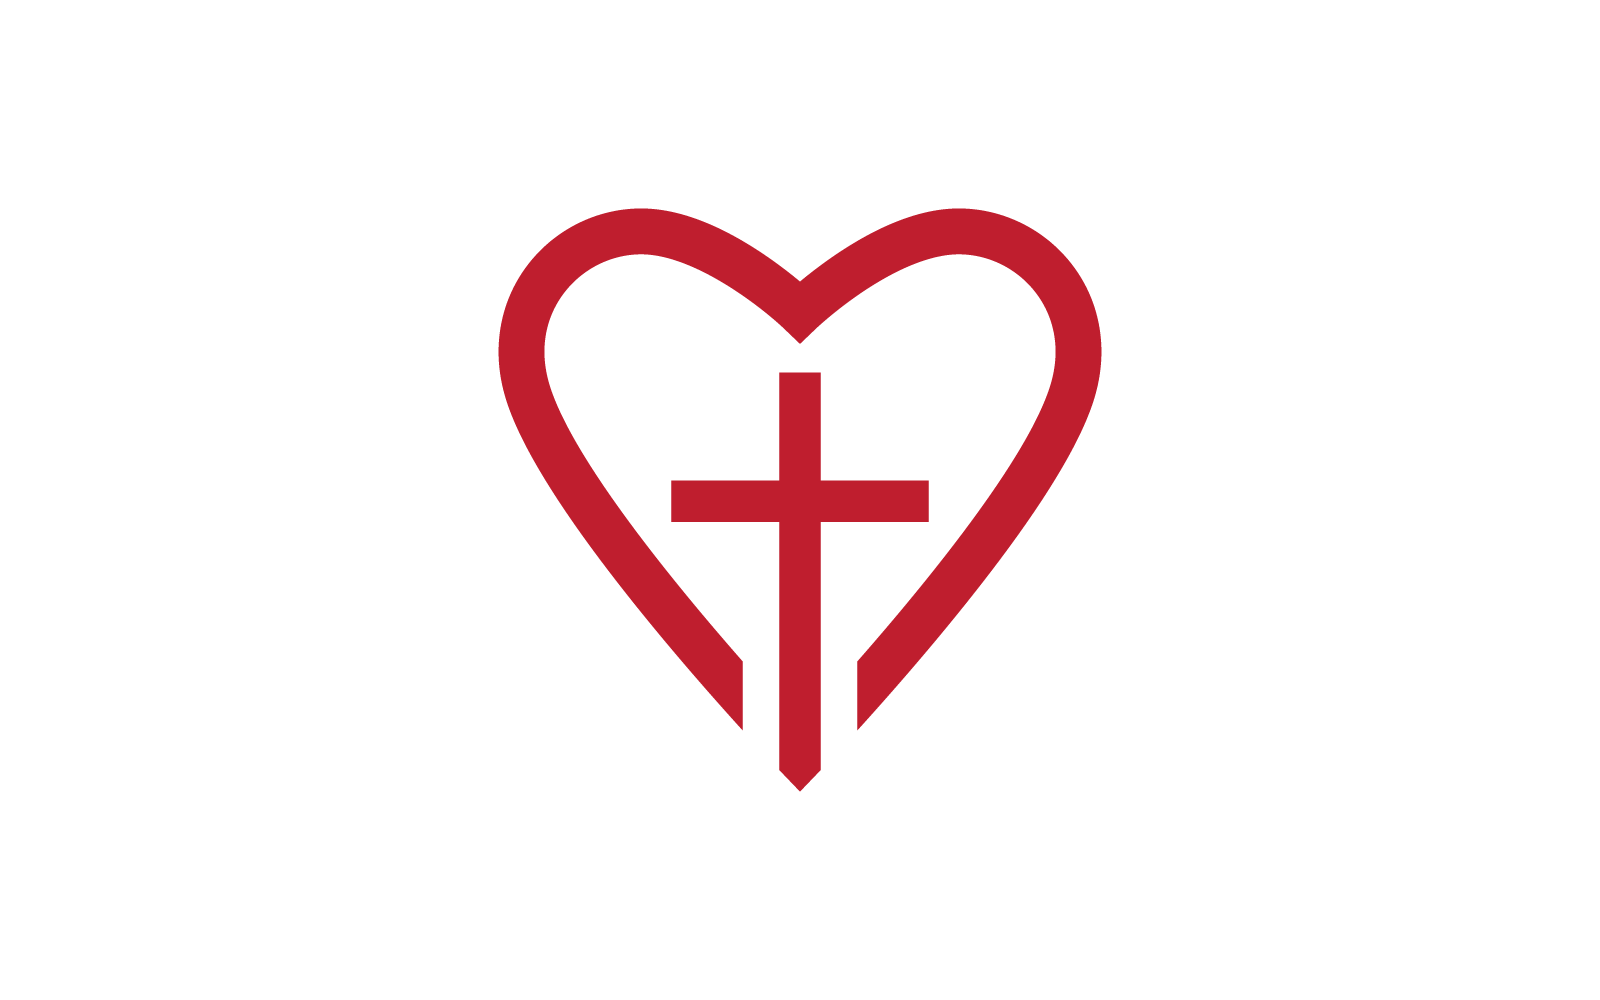 Cross and love logo vector icon flat design